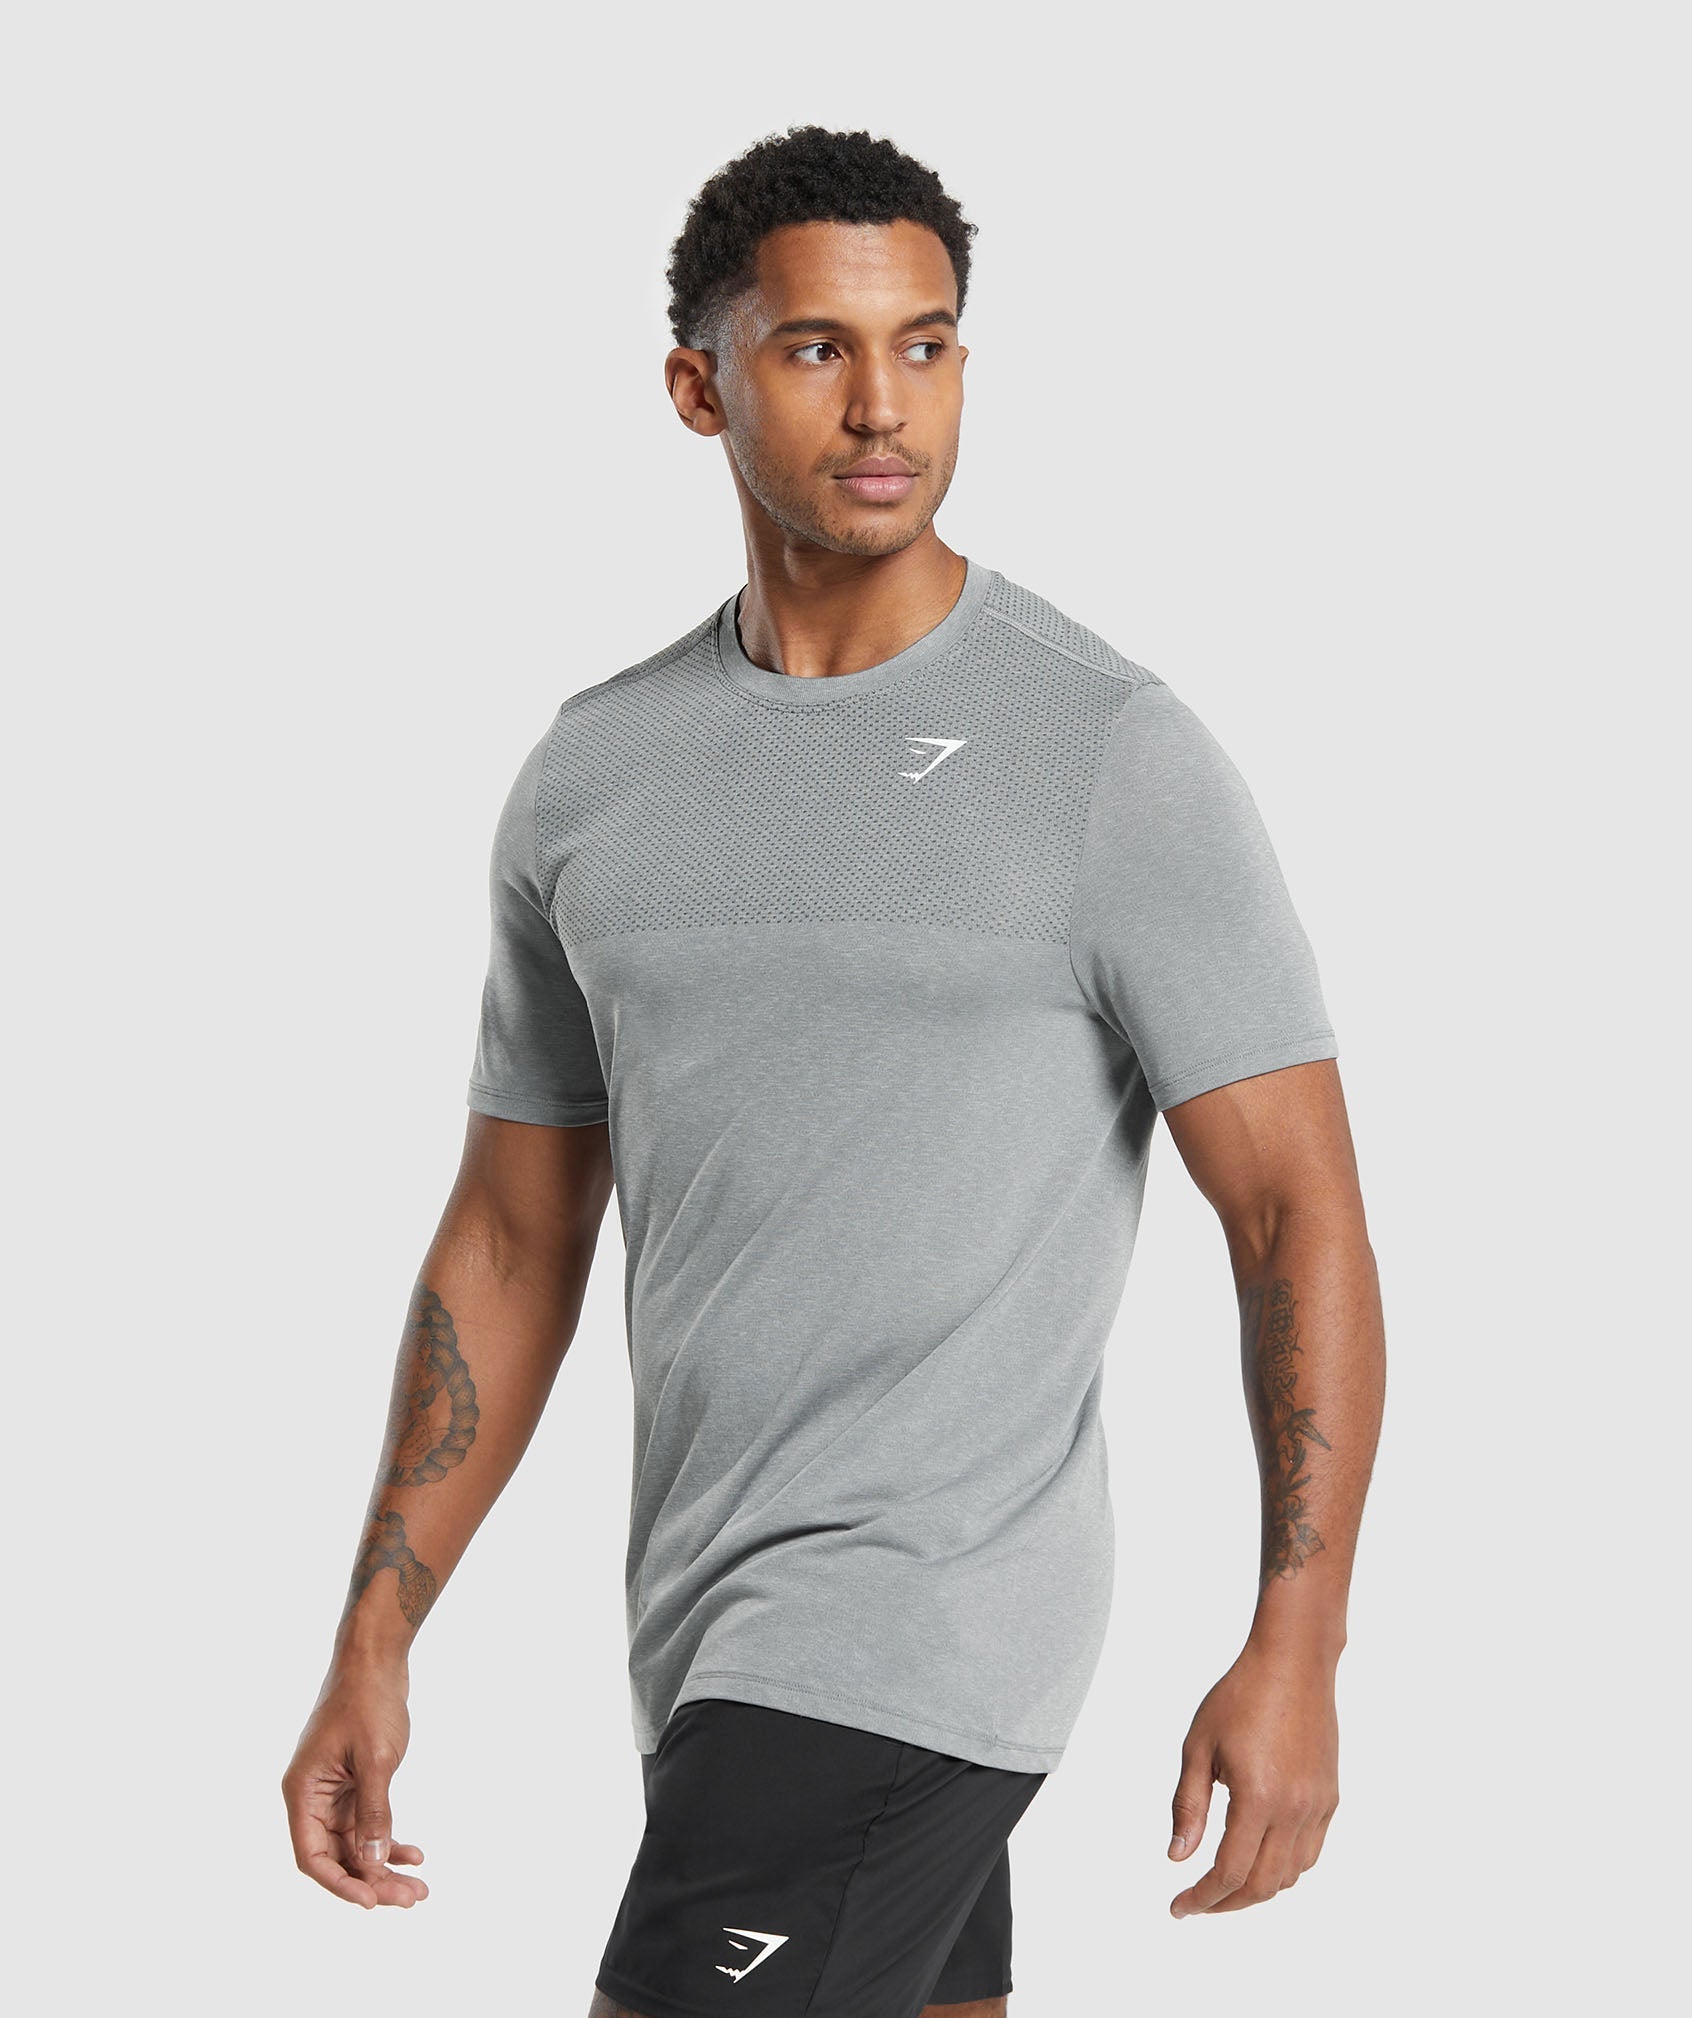 Vital Seamless T-Shirt in Light Grey/Black Marl - view 3